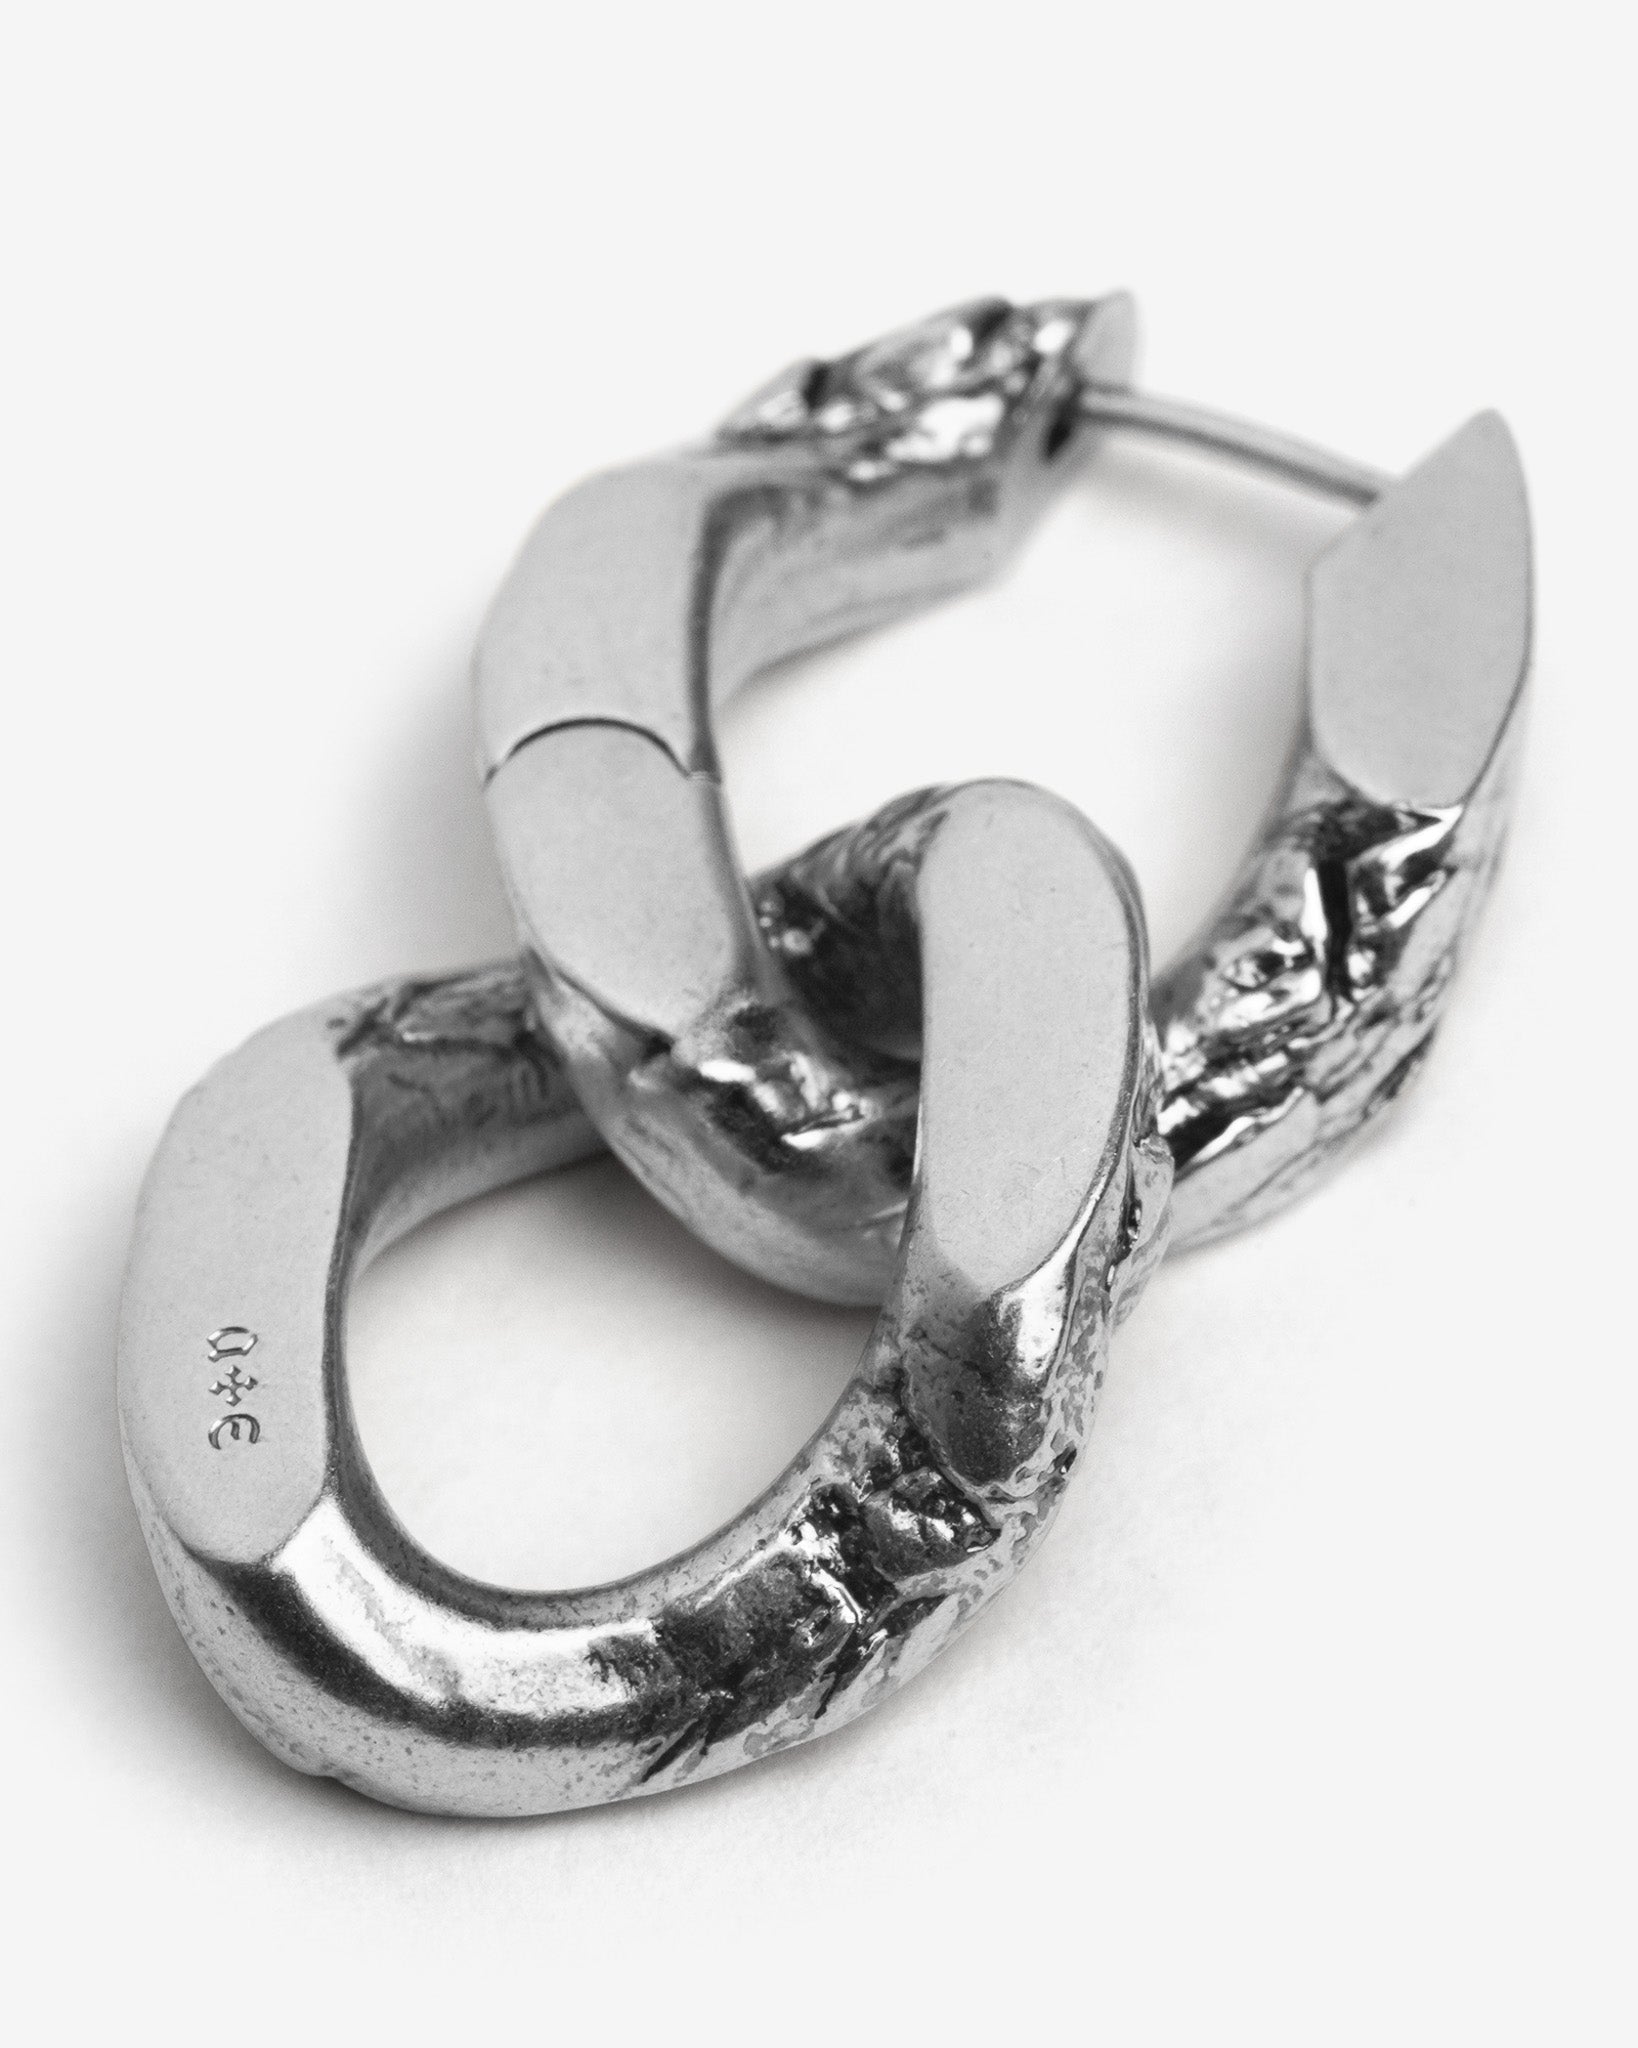 three curb chain links earrings in metal